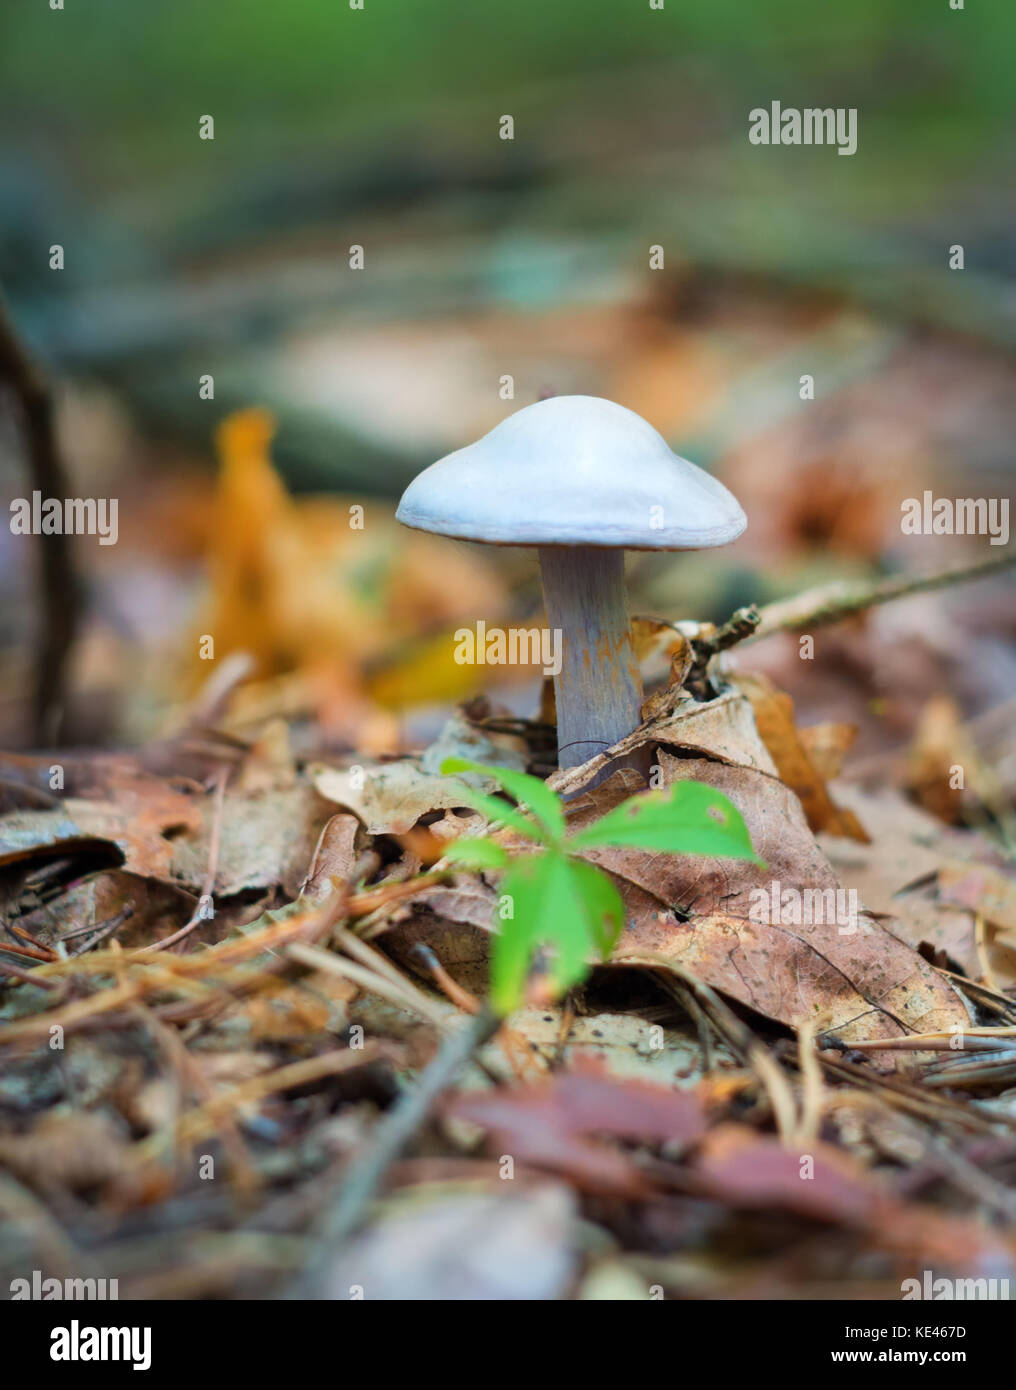 mushroom growing in the woods on a fallen tree Stock Photo